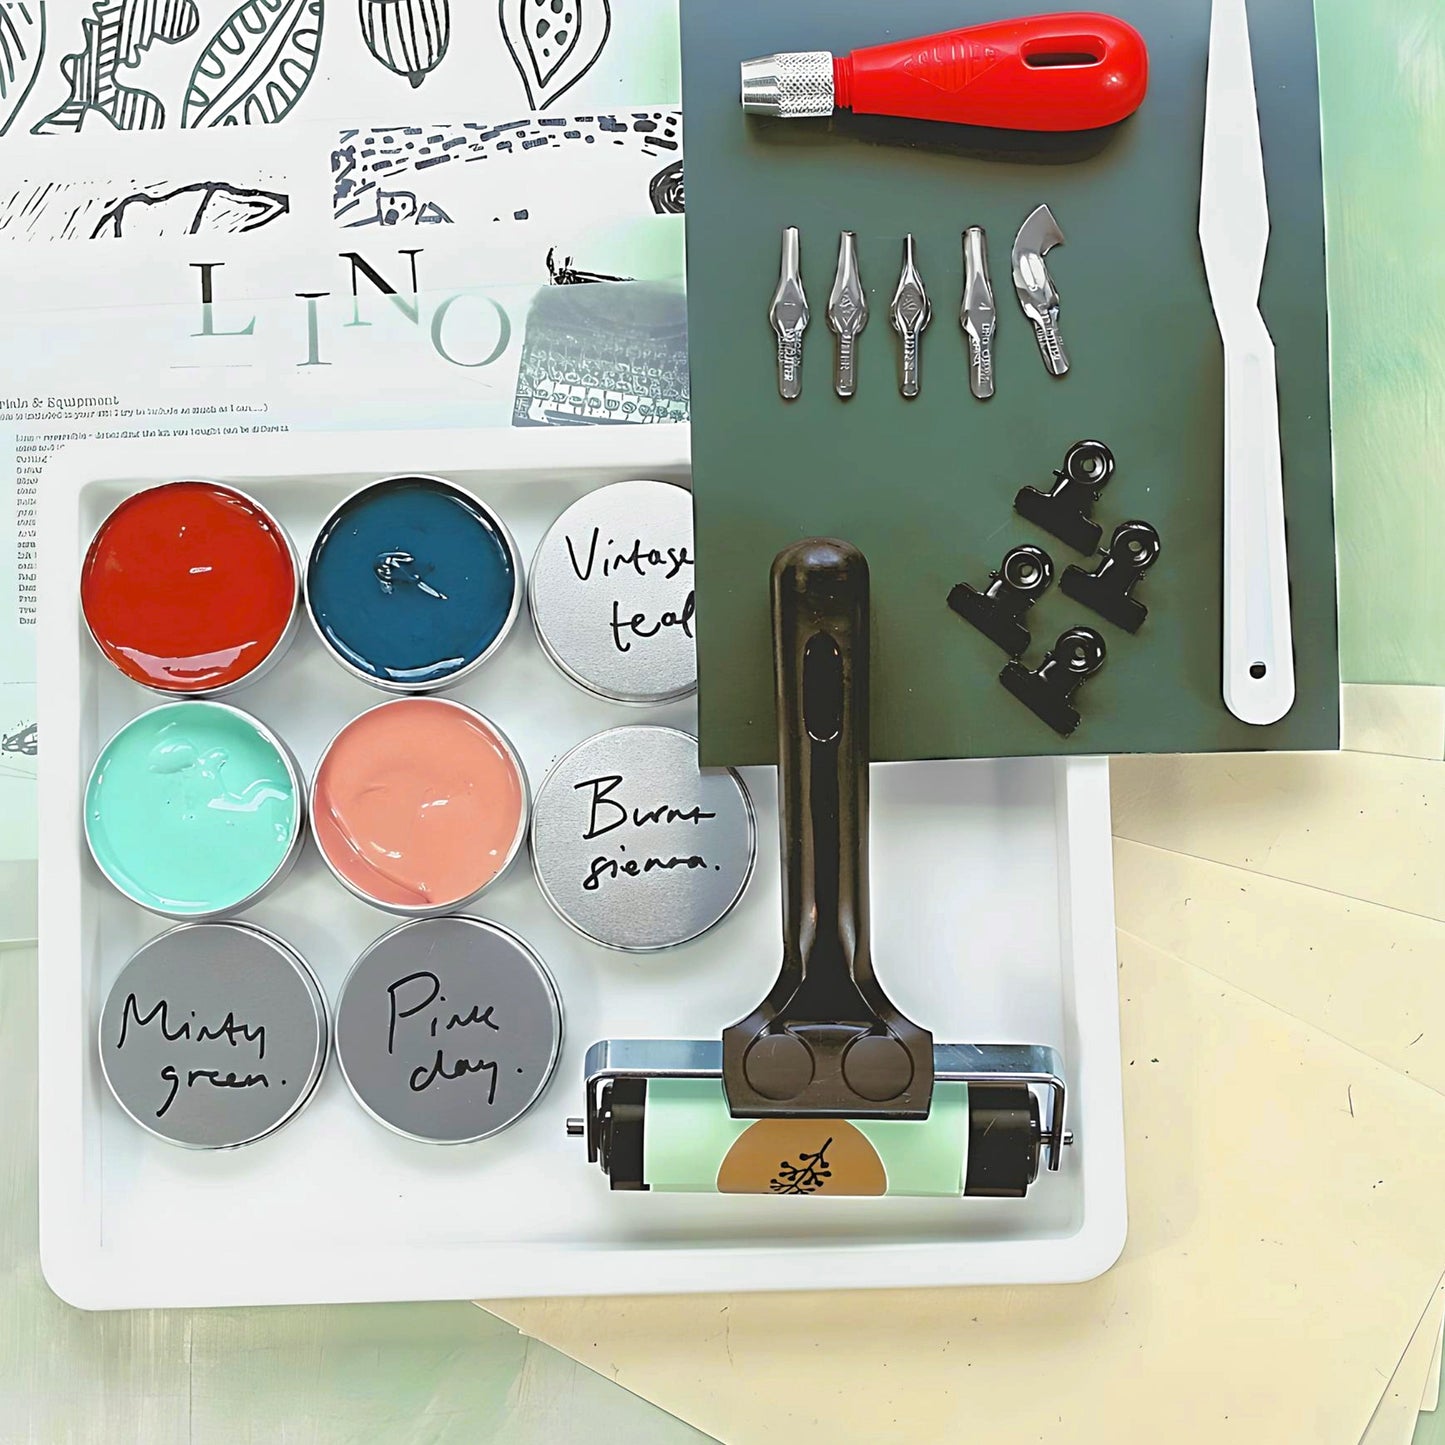 Linocut & print compact starter kit – Clever Hands